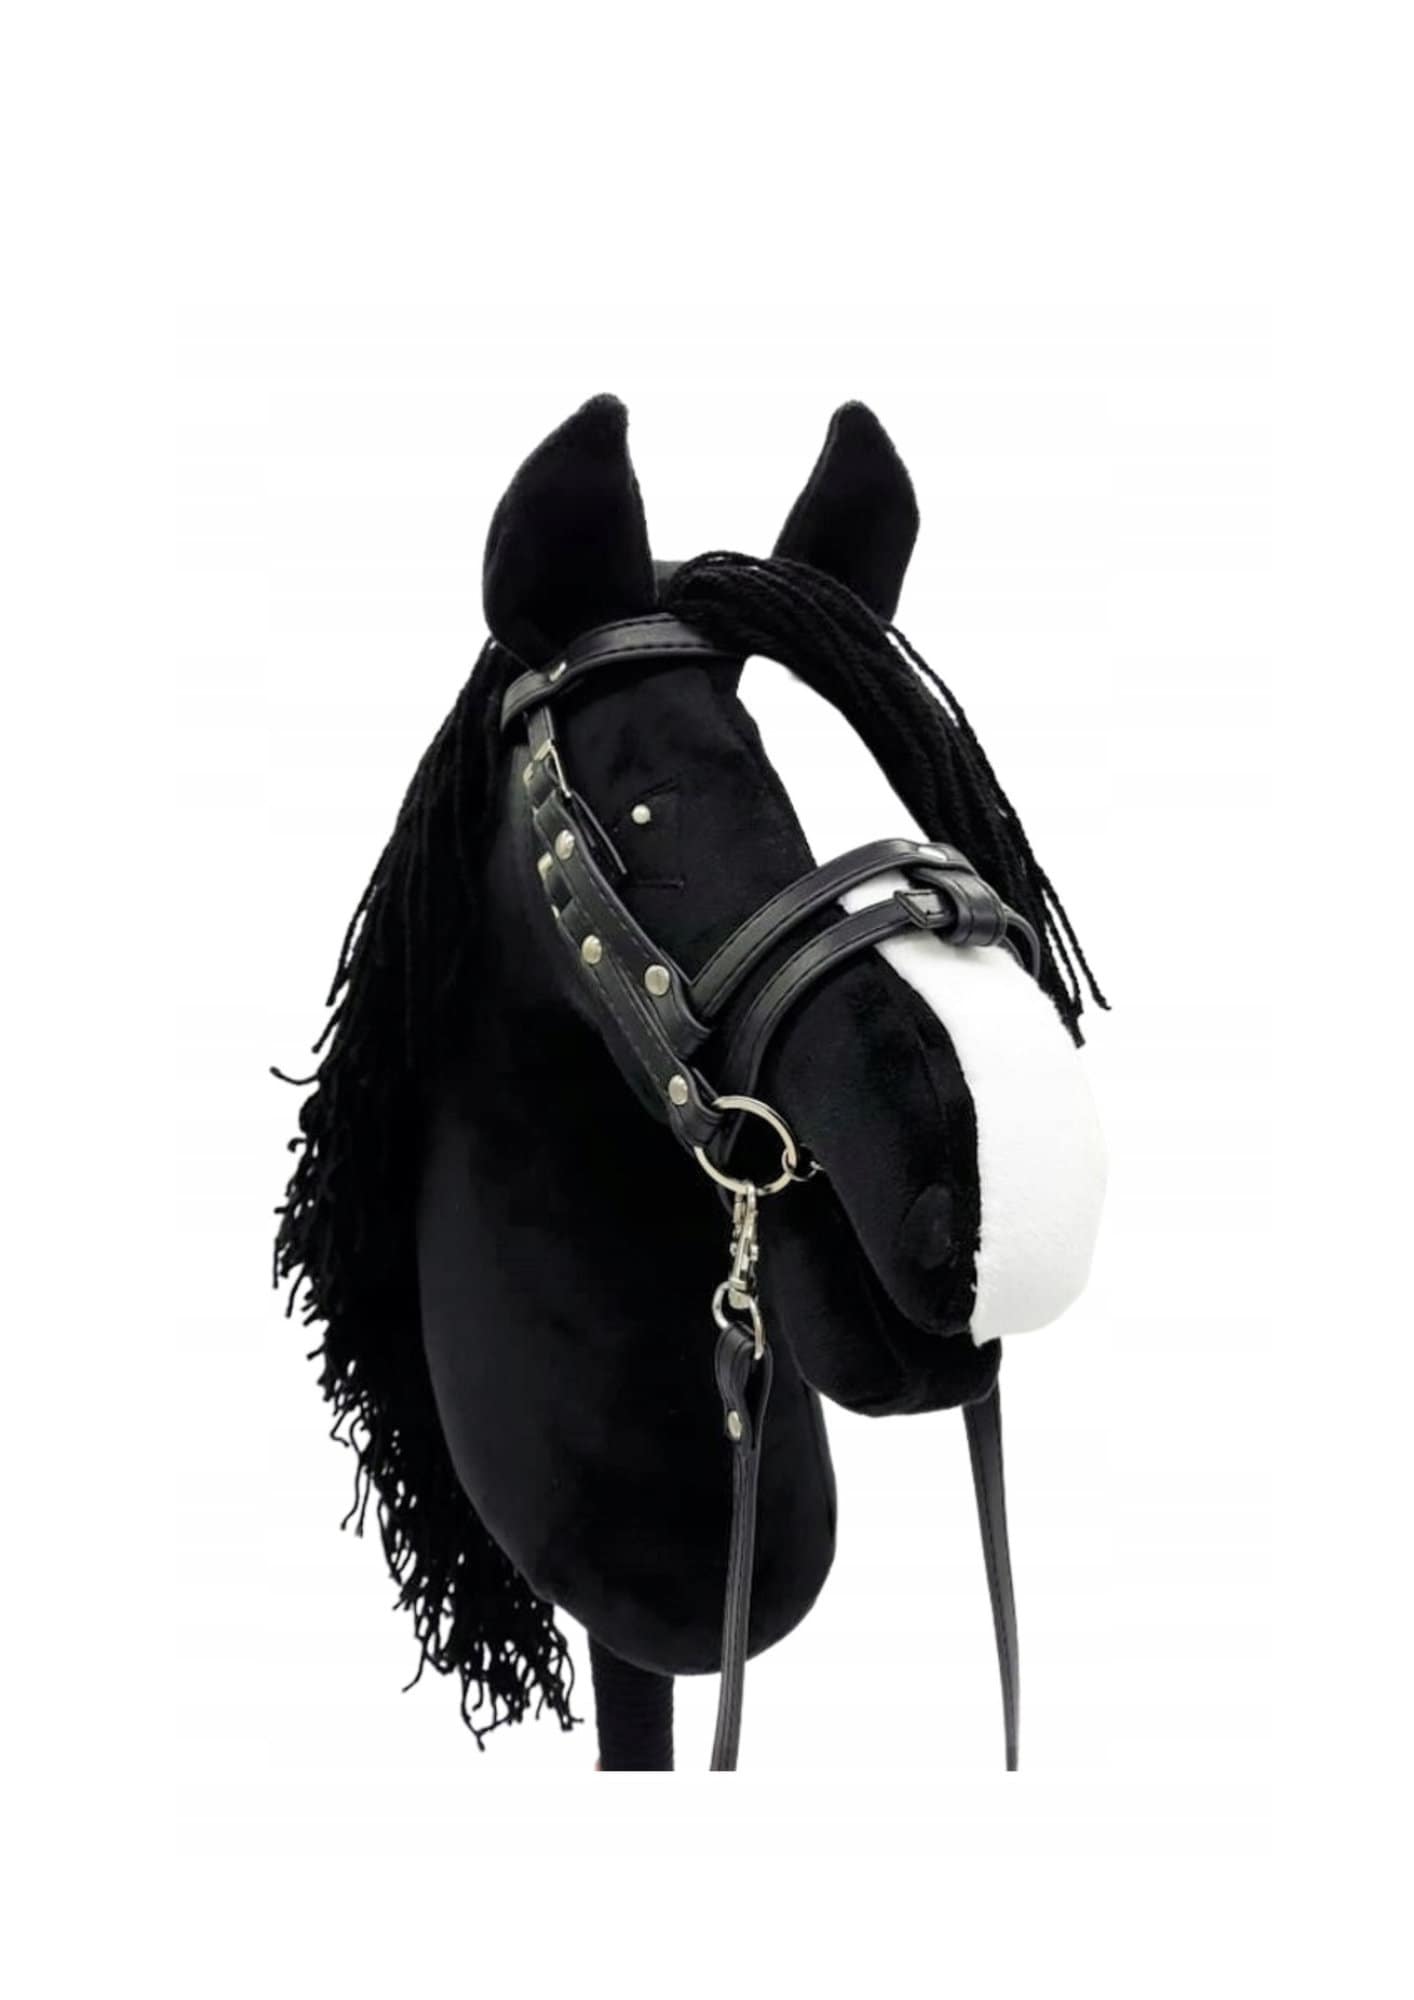 Hobby Horse, Black Hobby Horse A3 Size, Hobby Horse With Bridle